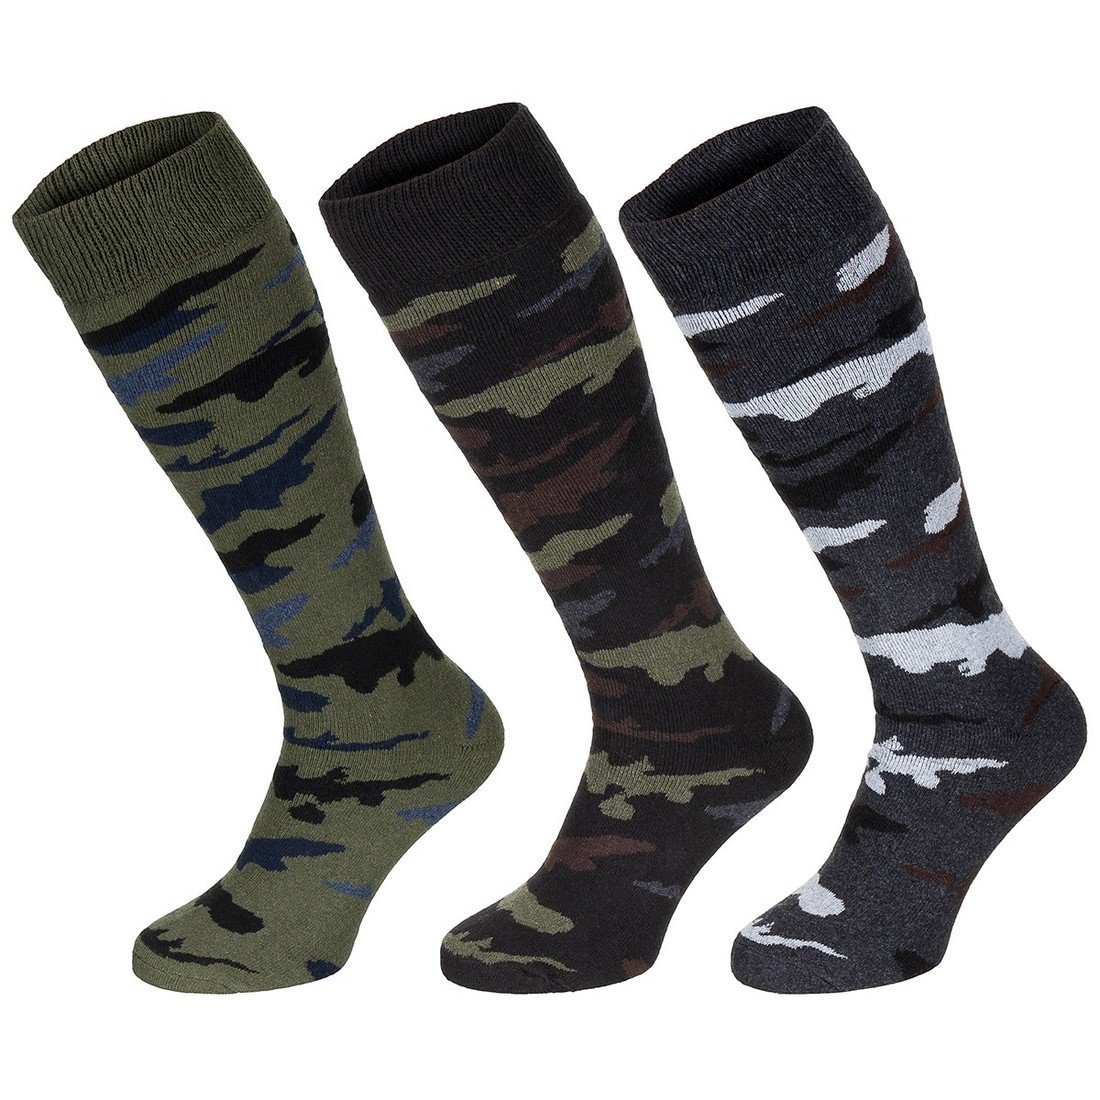 Ponožky zimní Fox Esercito 3 ks - olivové-šedé, 43-46